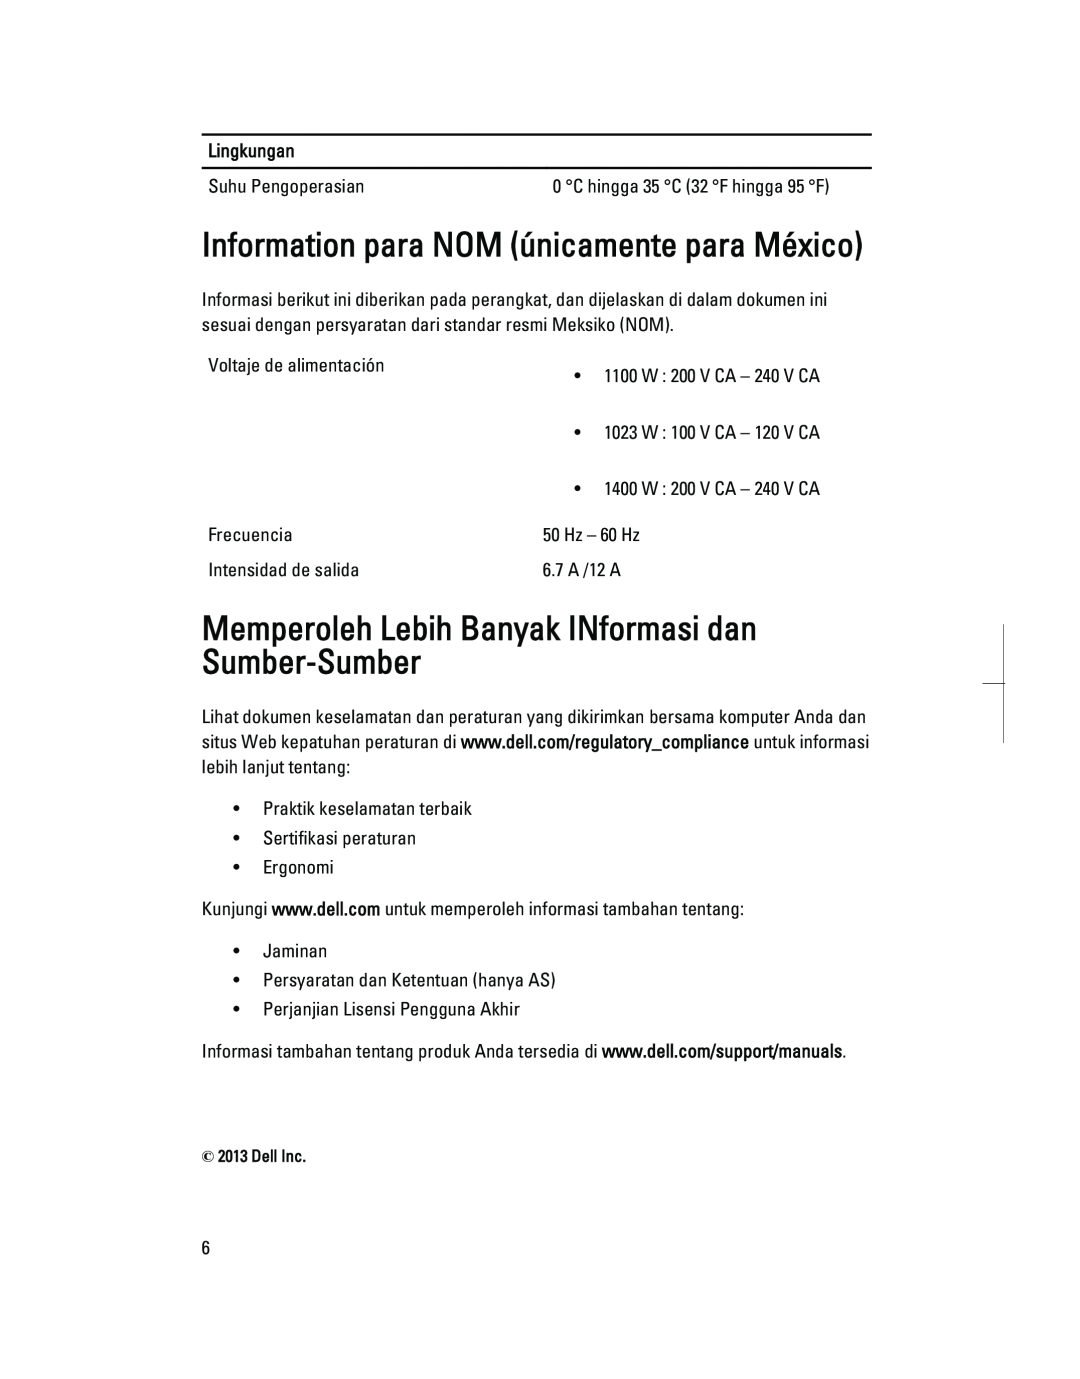 Dell R7610 manual Information para NOM únicamente para México, Lingkungan 